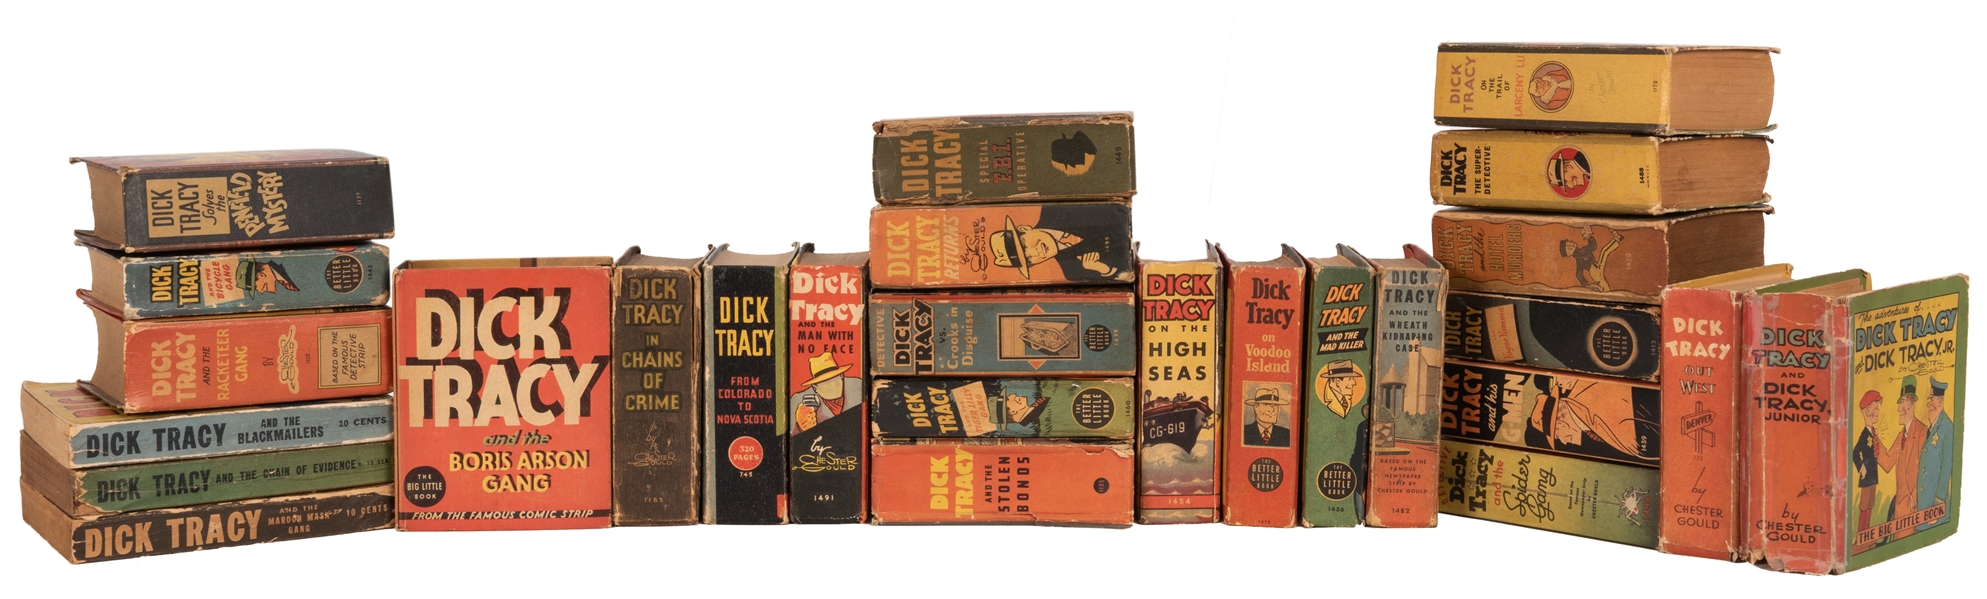 Dick Tracy. 26 Big Little Books.